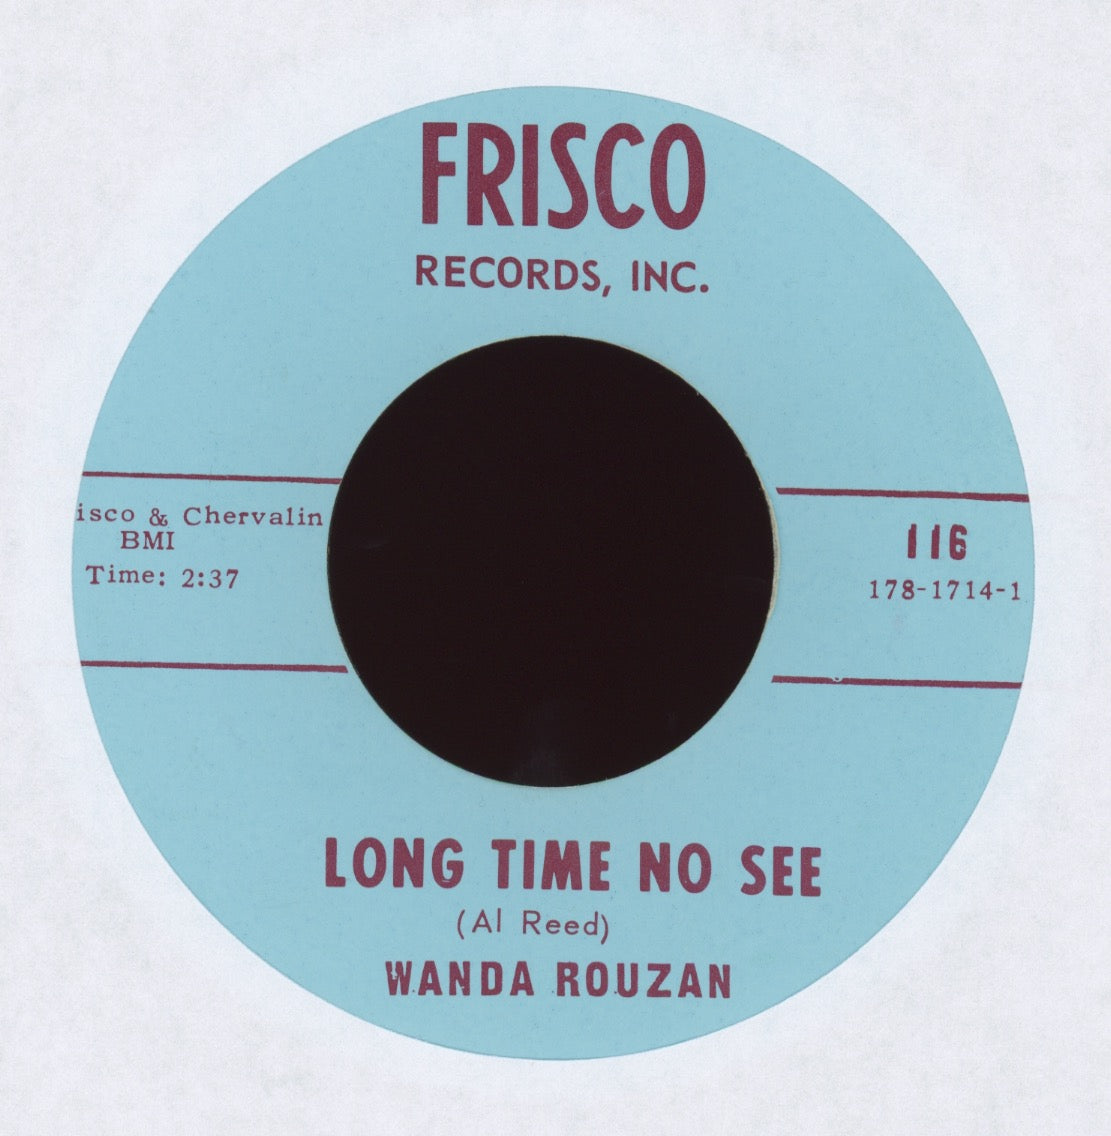 Wanda Rouzan - Long Time No See on Frisco